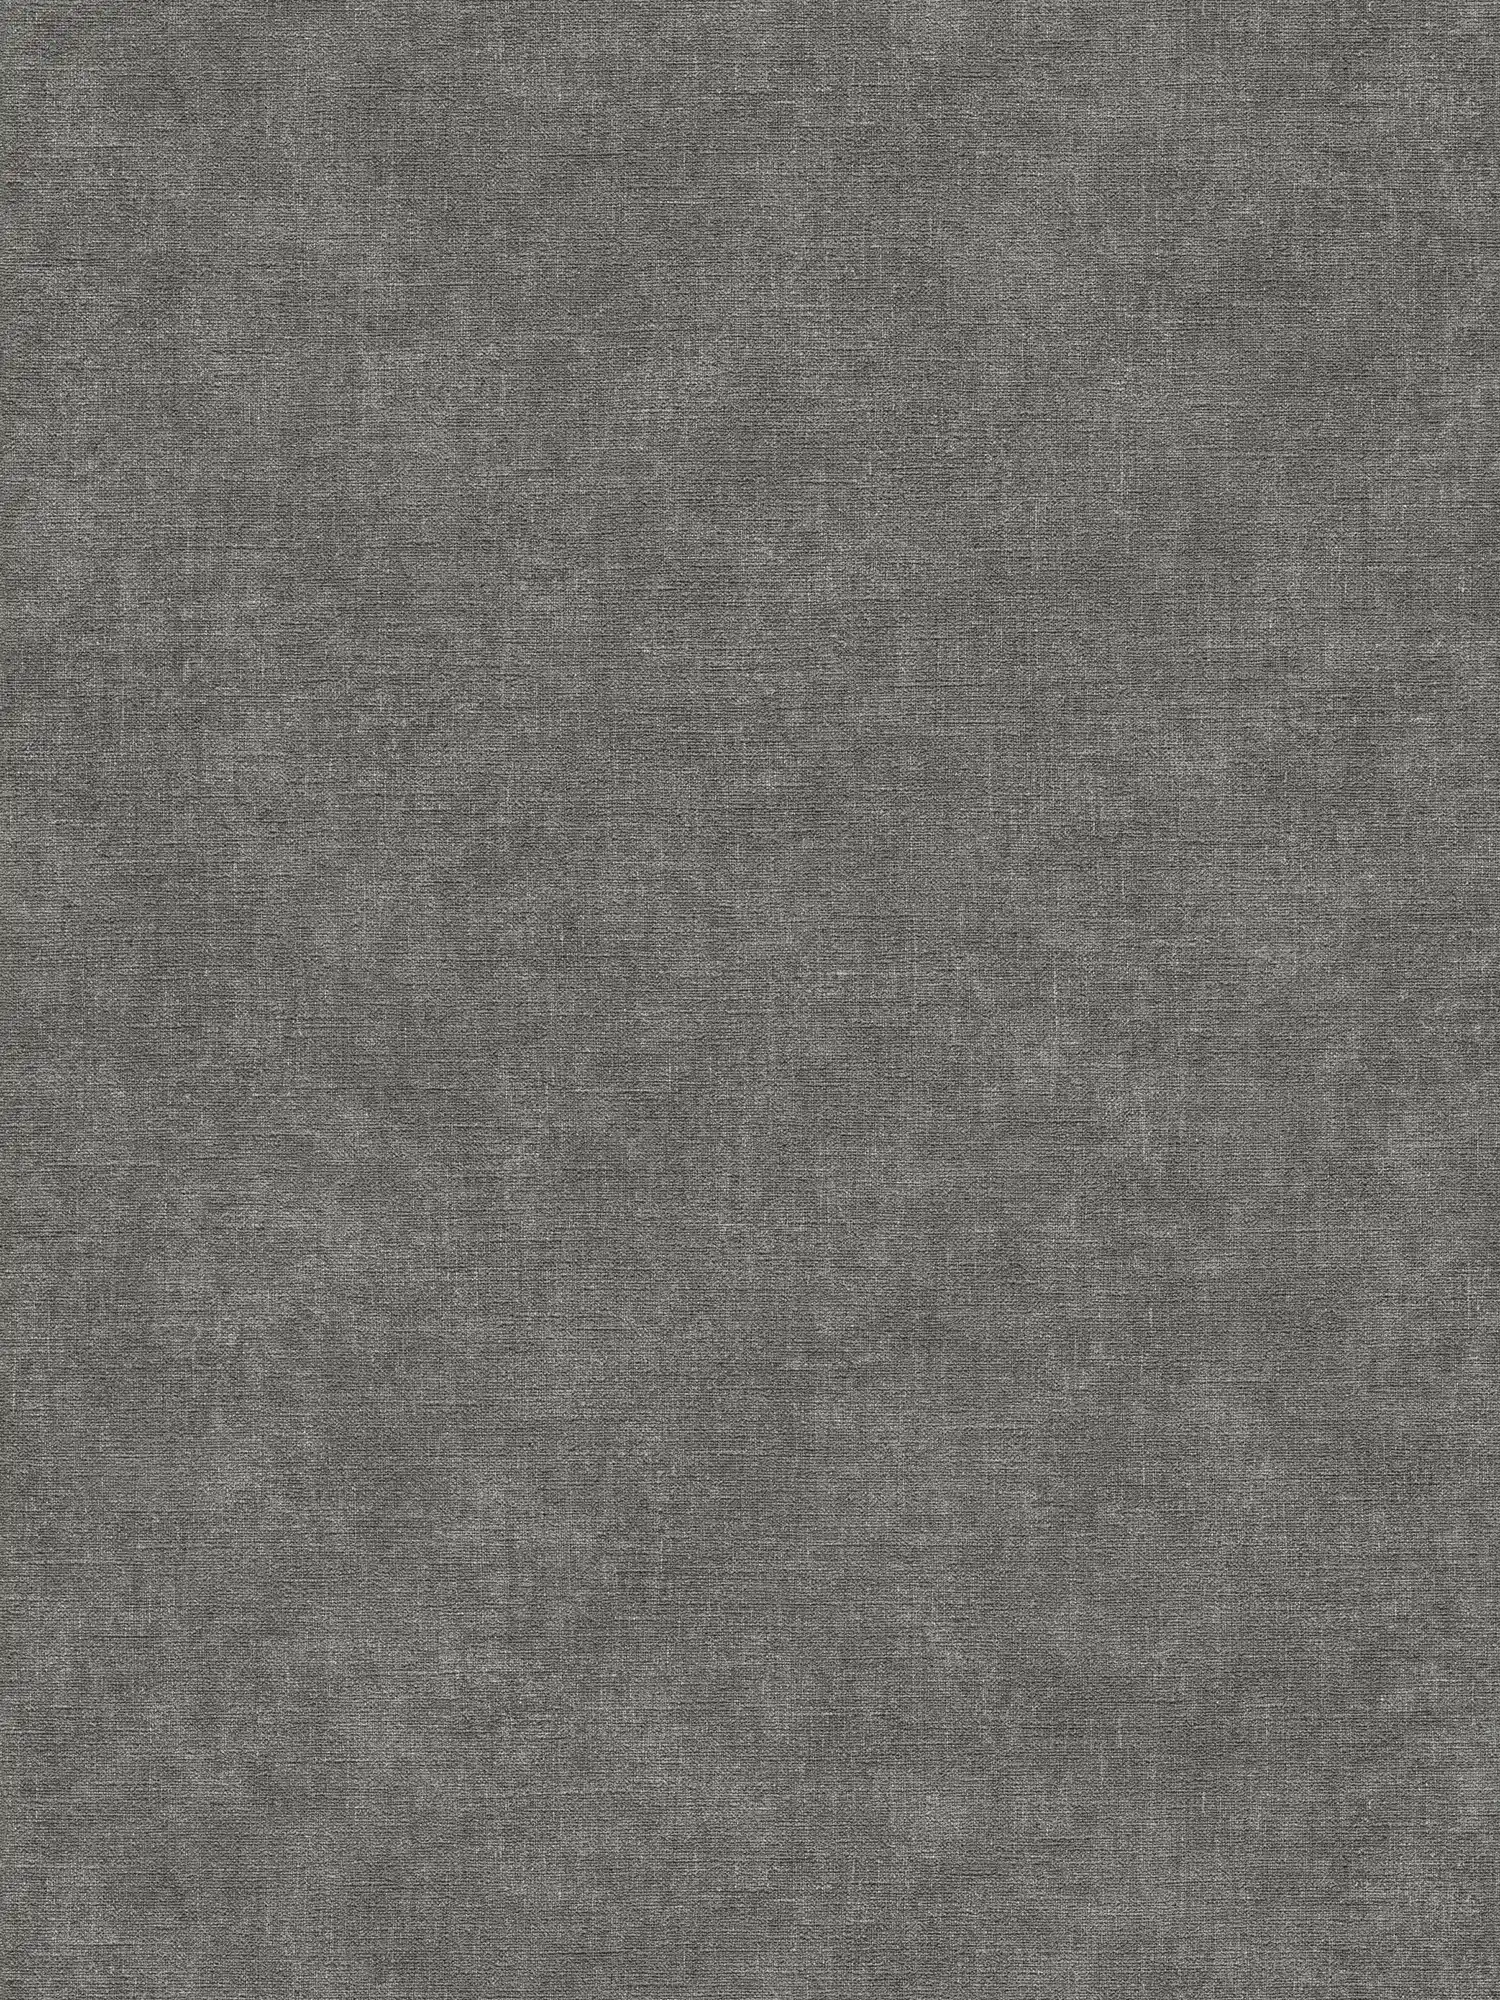             Einfarbige Vliestapete in Putzoptik – Schwarz, Grau
        